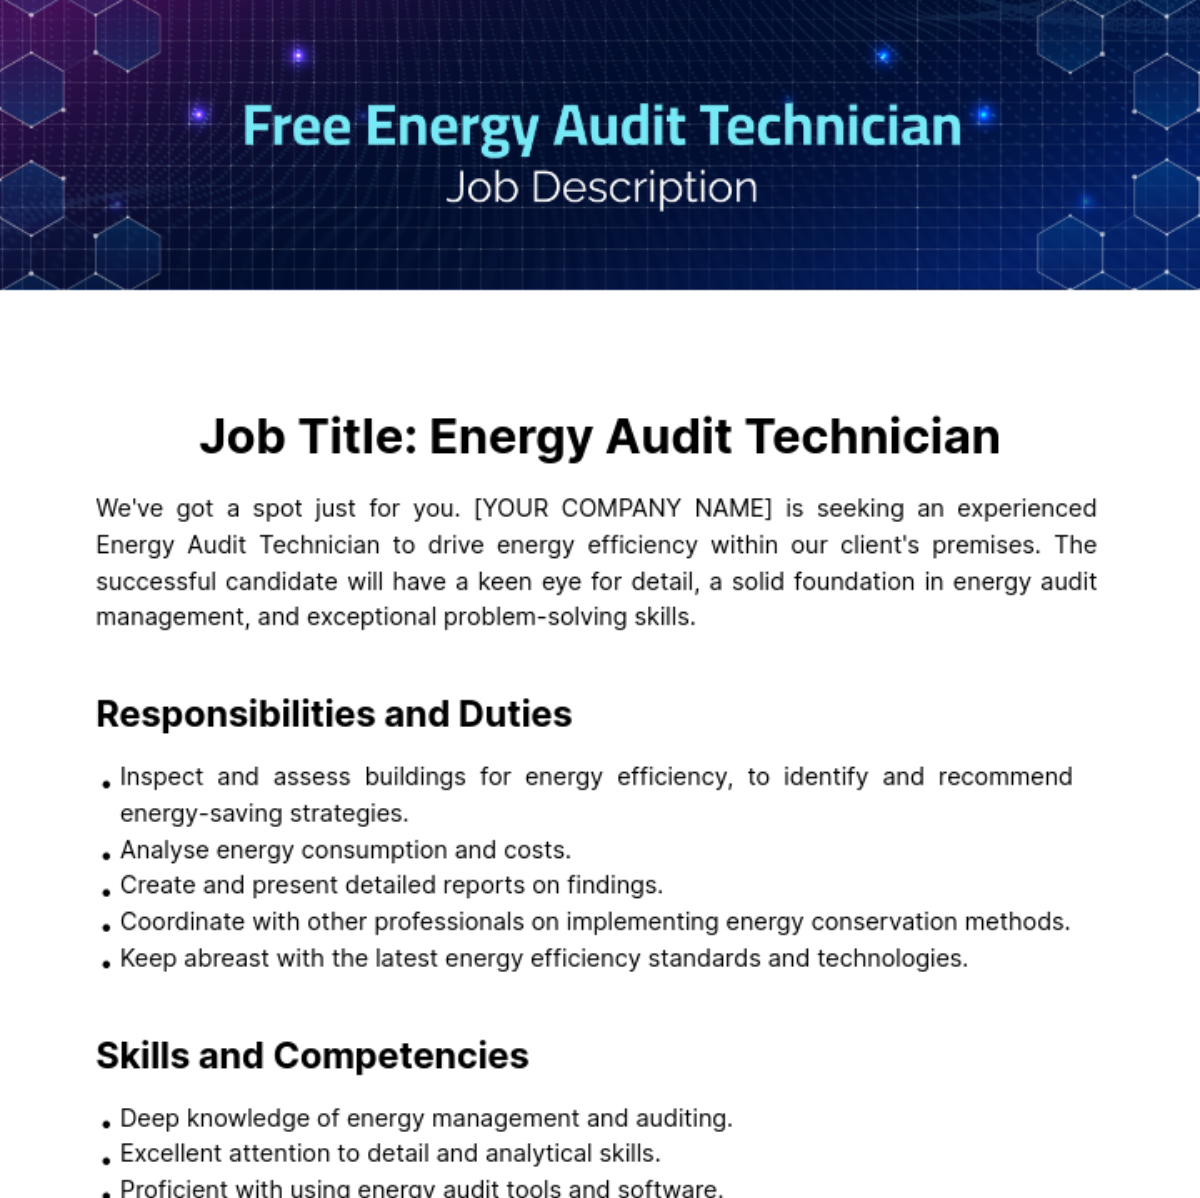 Energy Audit Technician Job Description Template